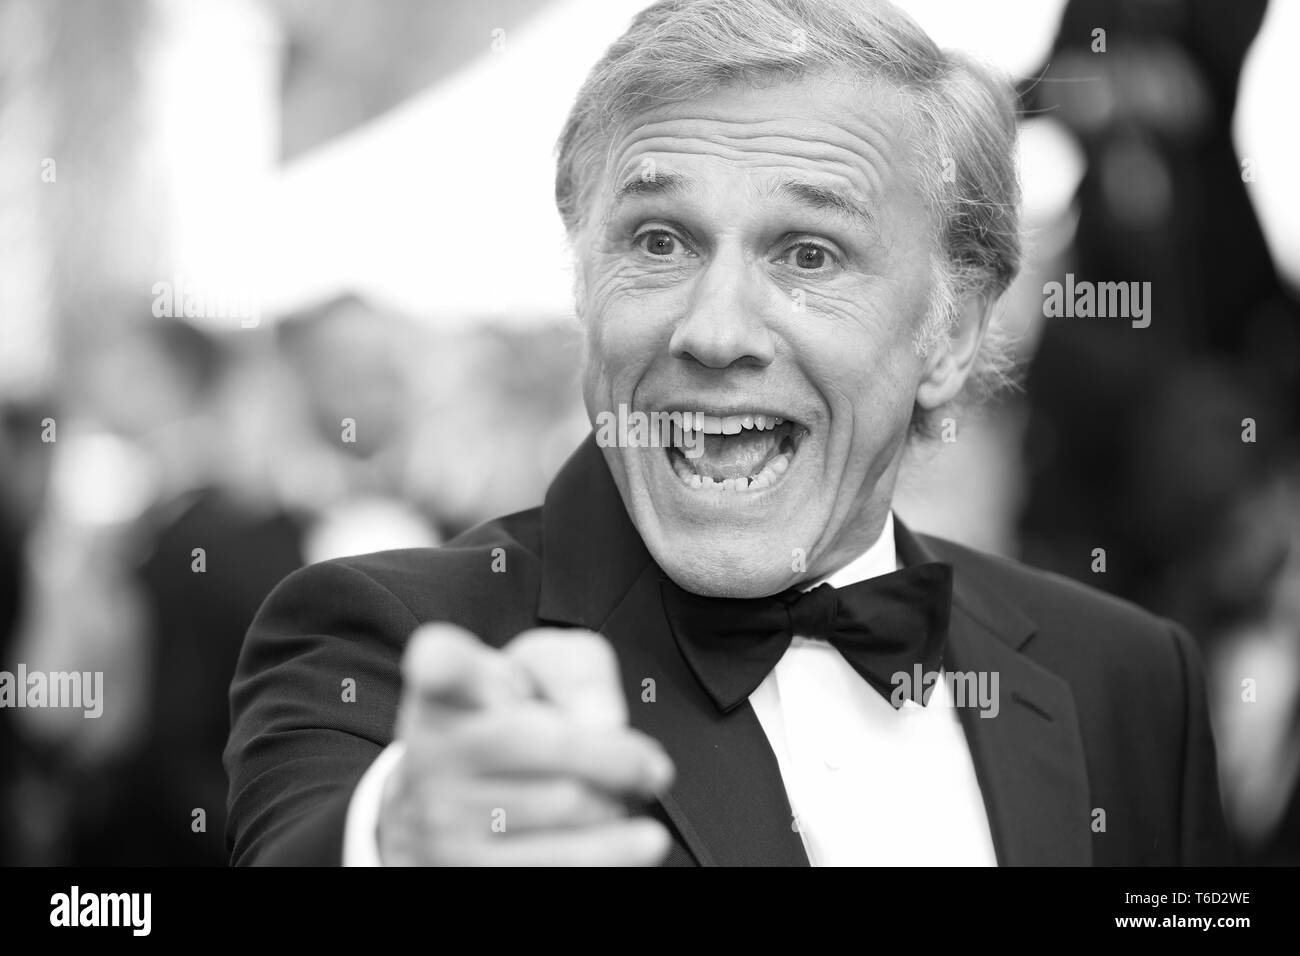 CANNES, Frankreich - 23. MAI 2017: Christoph Waltz auf dem Cannes Film Festival 70. Jahrestag Feier Red Carpet (Foto: Mickael Chavet) Stockfoto